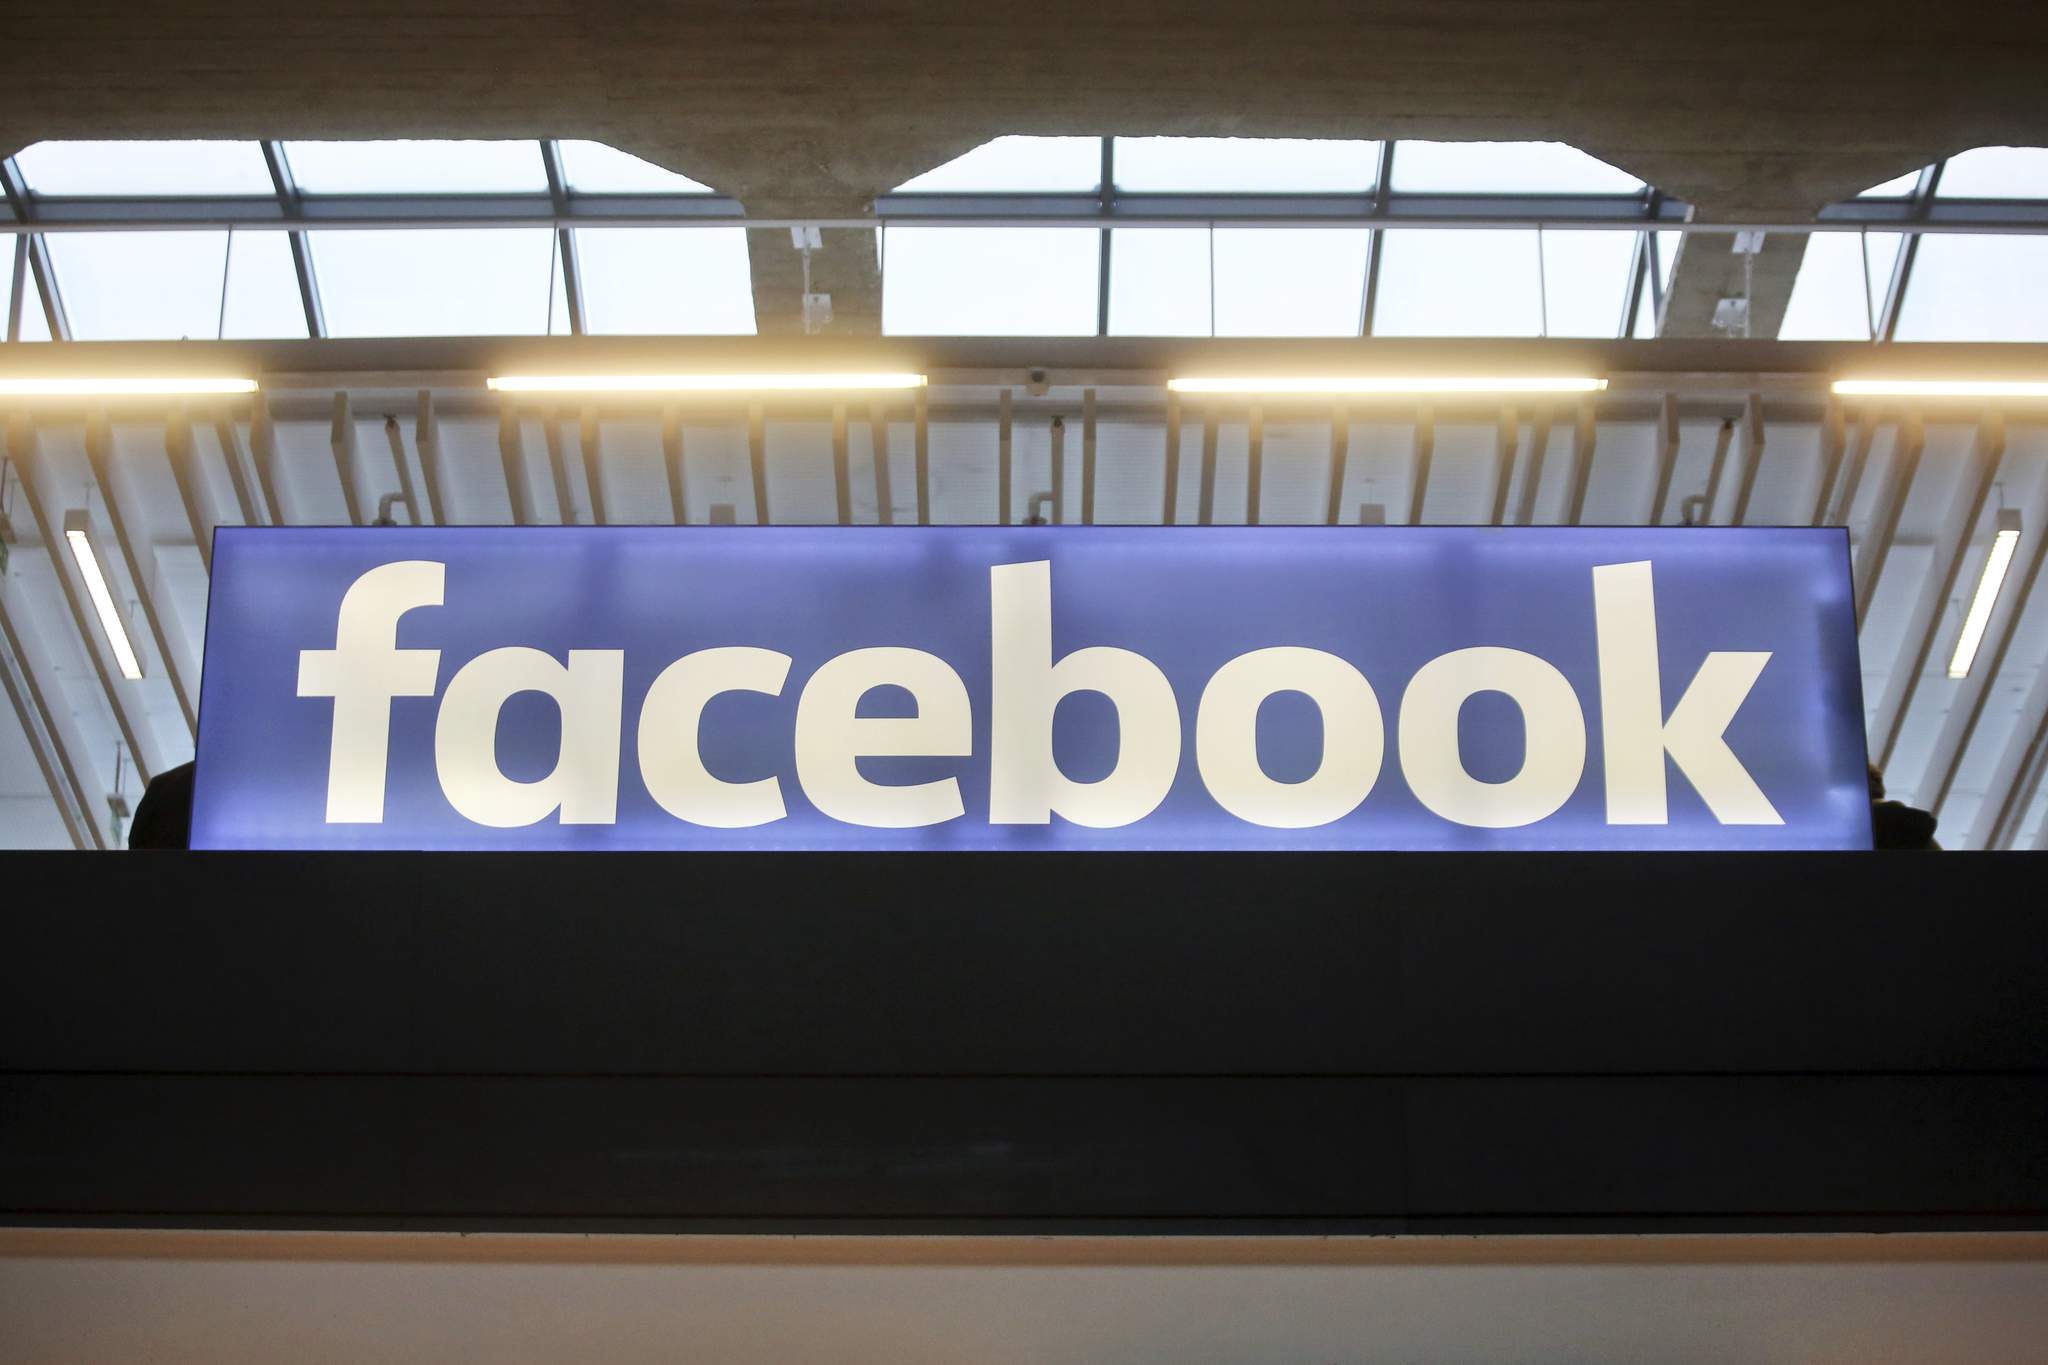 Report: Extremist groups thrive on Facebook despite bans